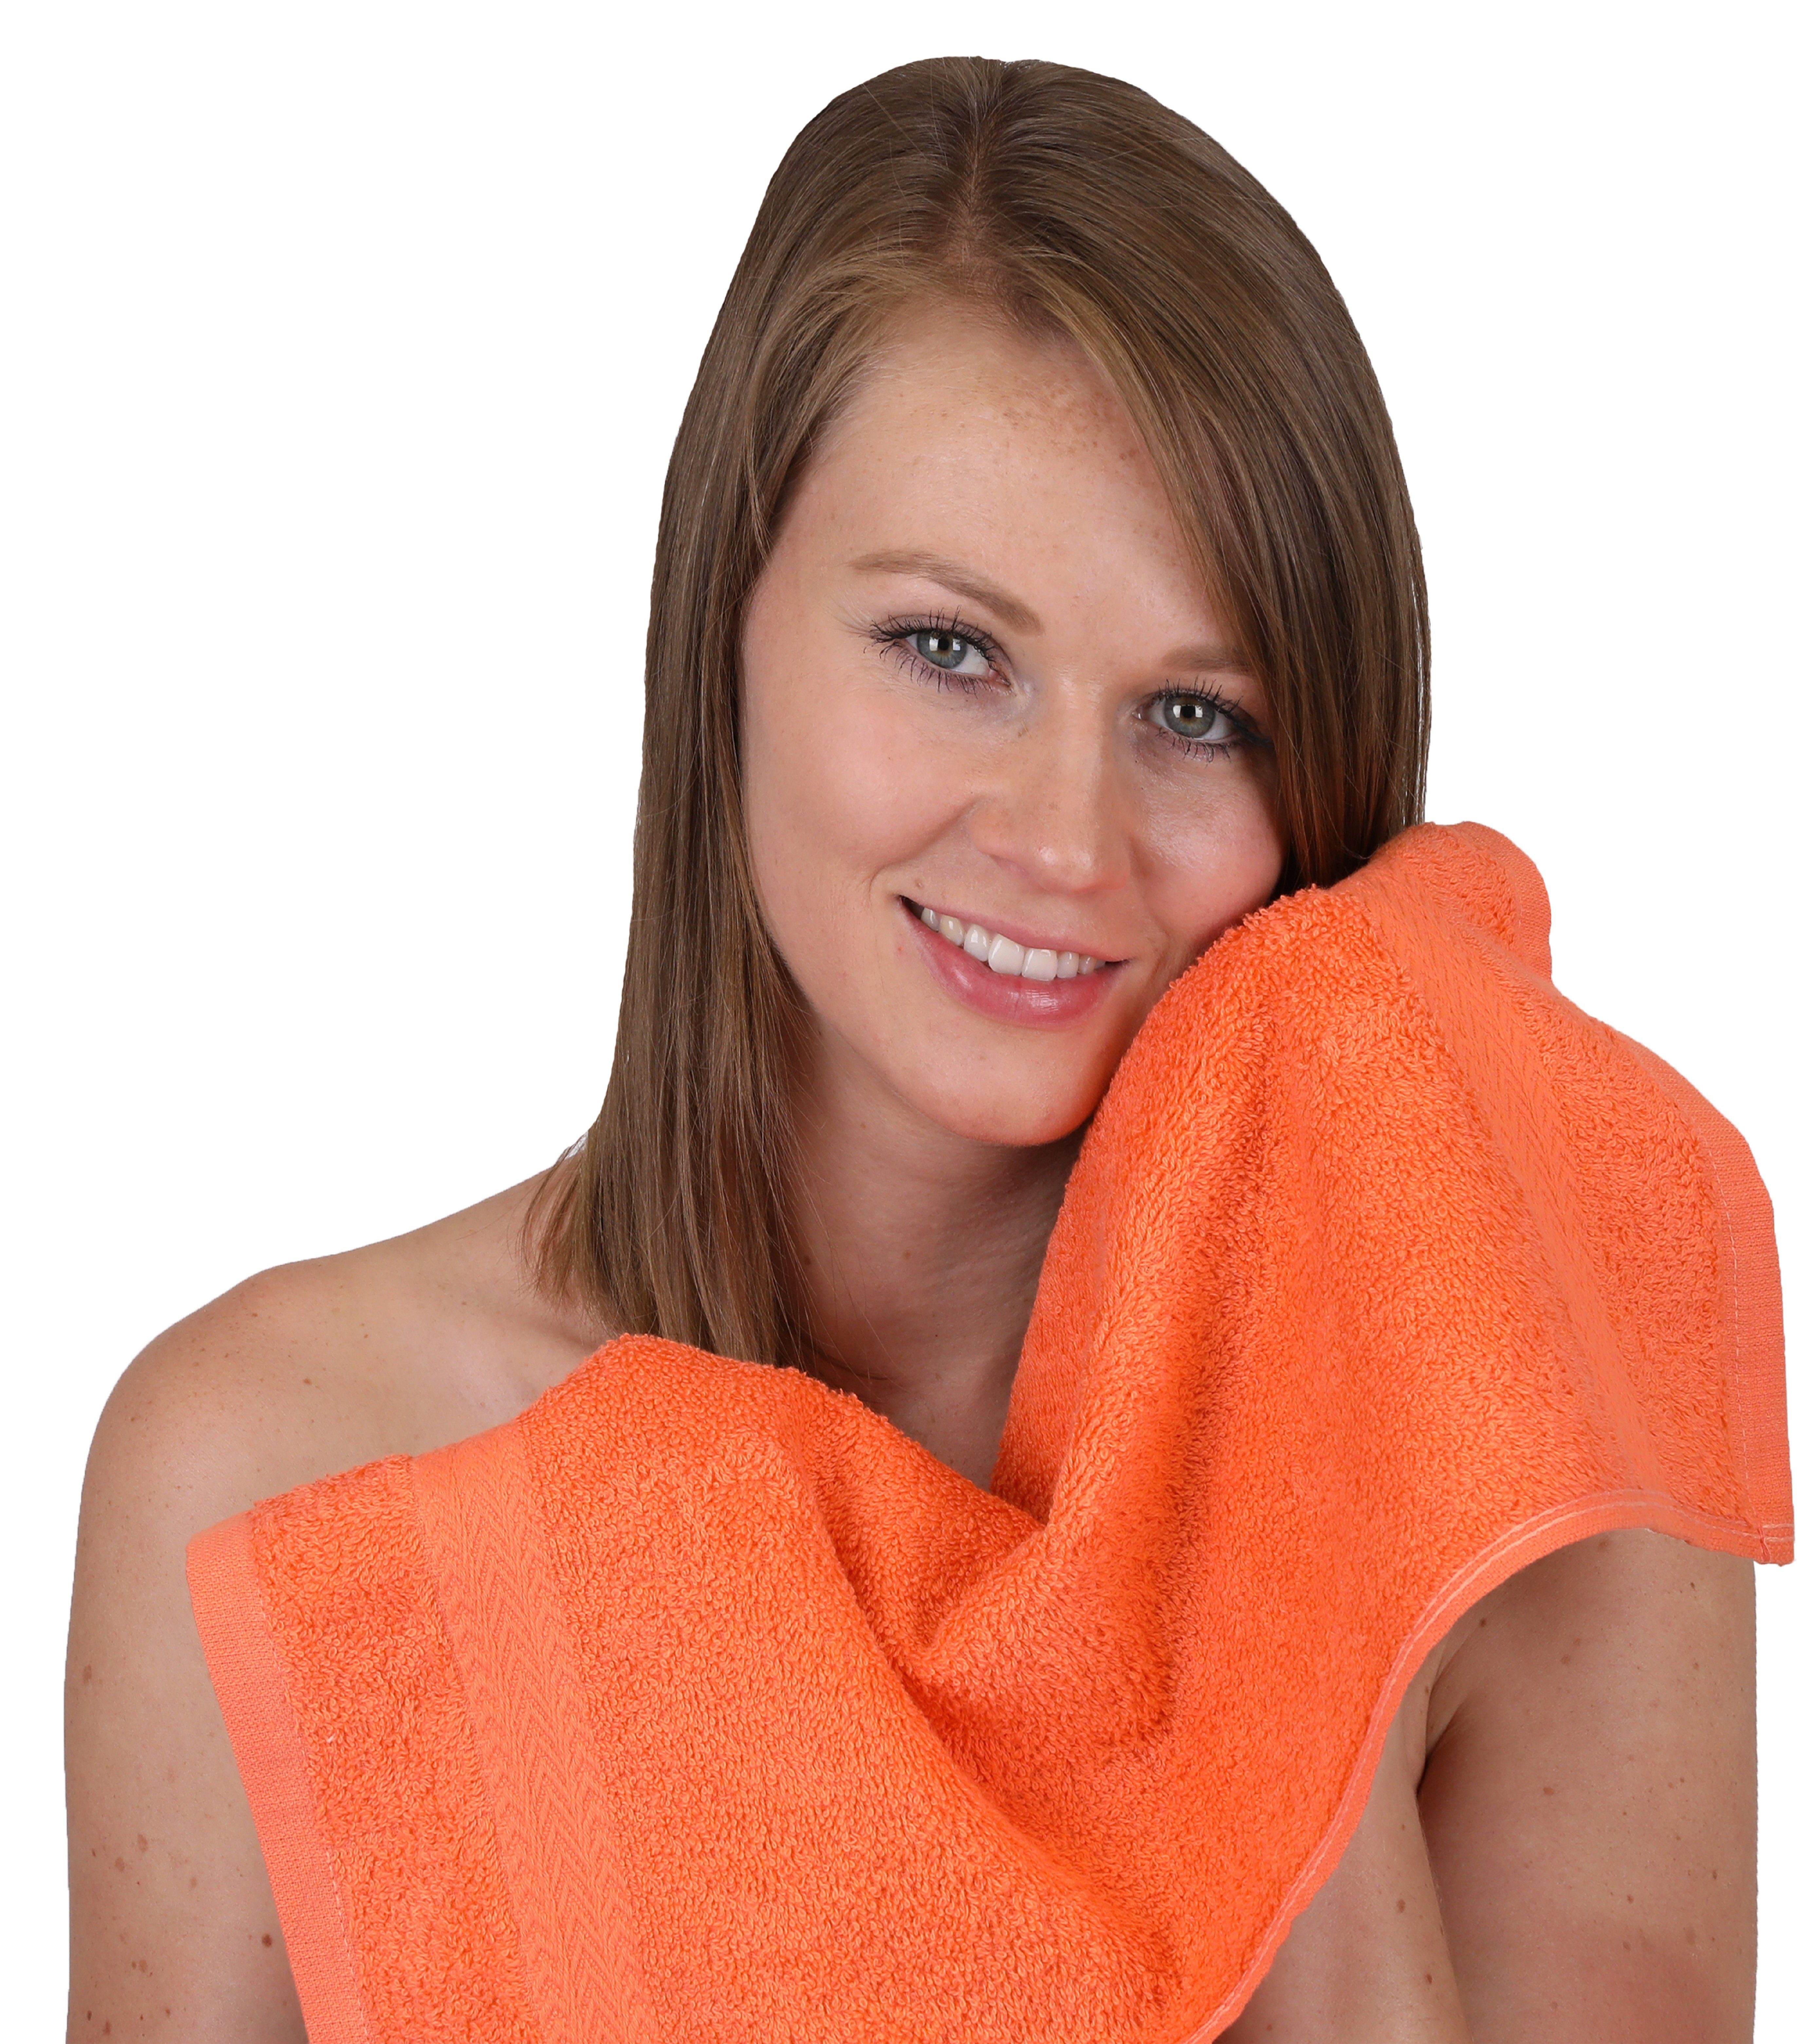 Betz Handtuch Set 12-TLG. Handtuch 2 Baumwolle, 2 2 Farbe Set 2 blutorange/rubinrot, 4 Premium 100% (12-tlg) Handtücher 100% Gästetücher Seiftücher Baumwolle Waschhandschuhe Duschtücher